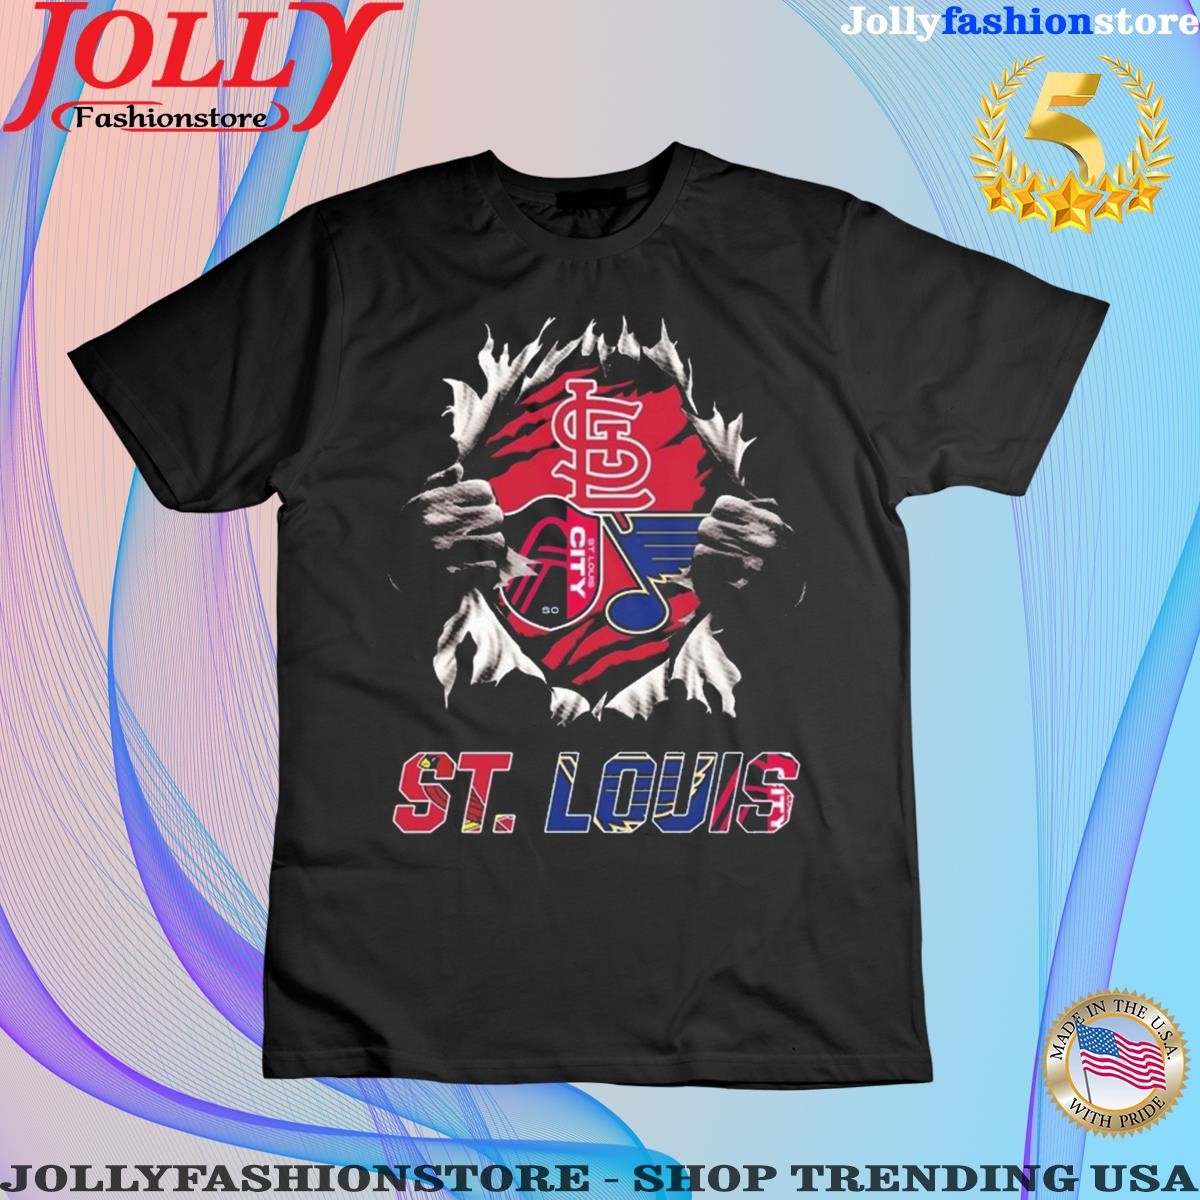 St. Louis Cardinals City Pride T-Shirt - Womens